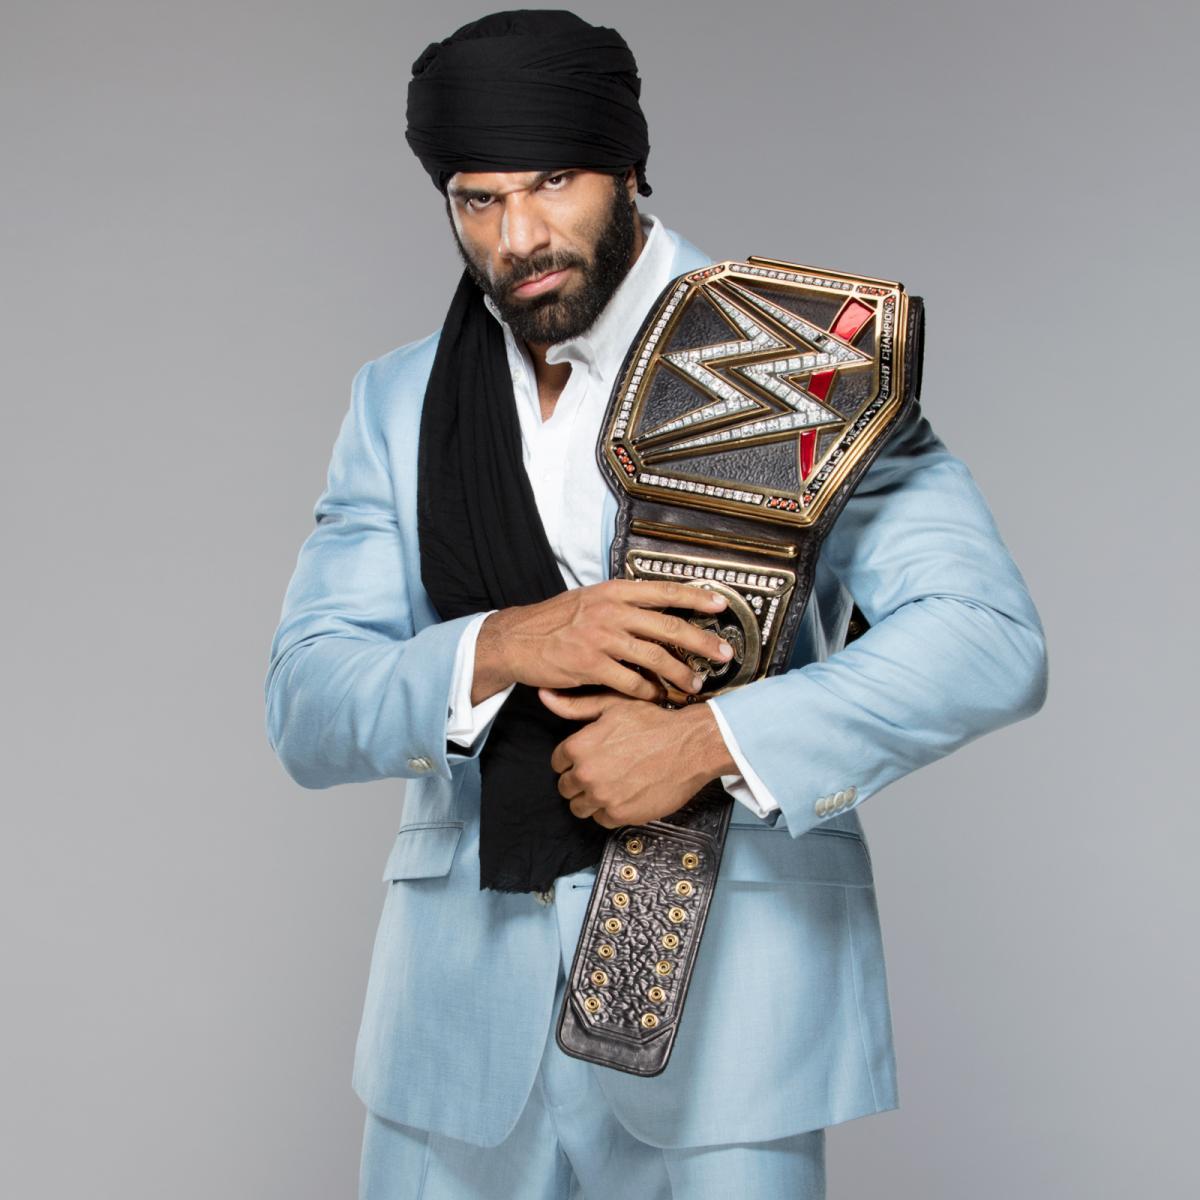 Jinder Mahal's photohoot with the stolen WWE Championship: photo